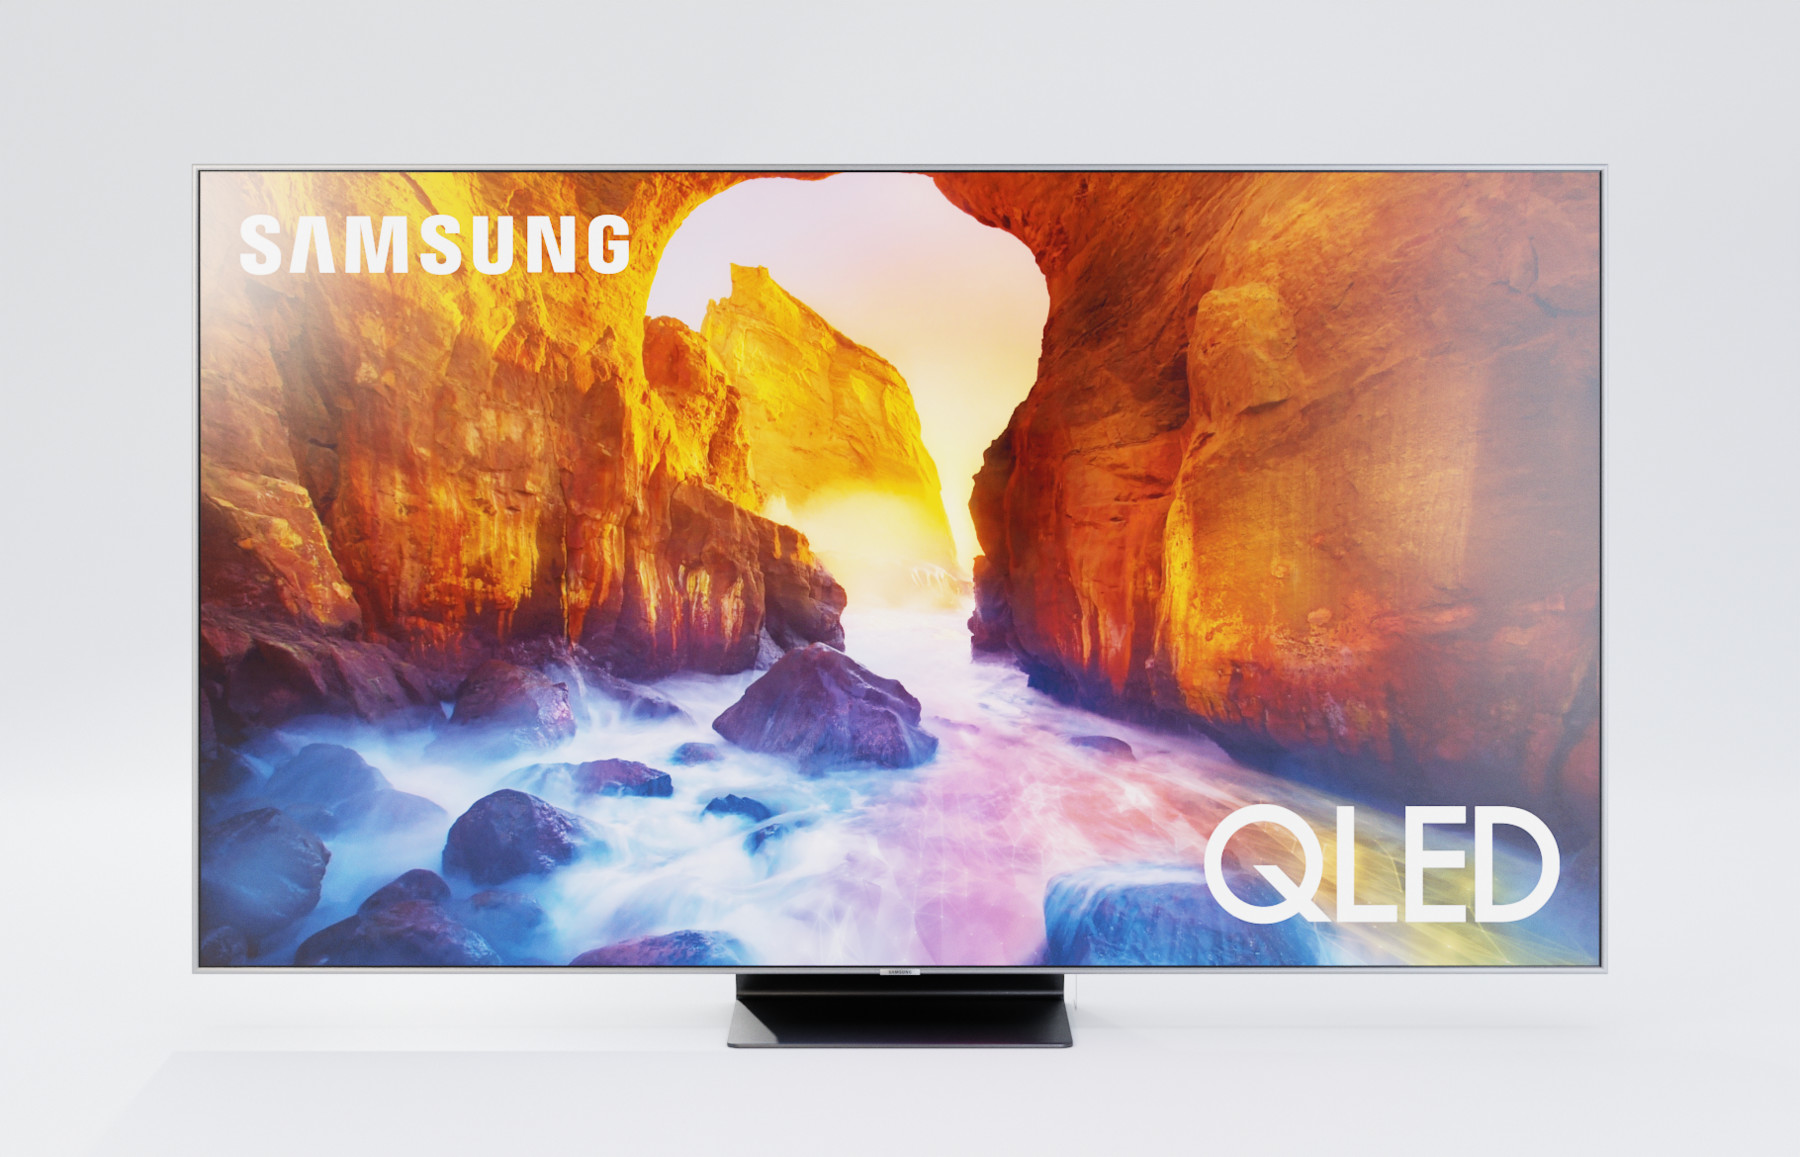 Samsung Q90r Tv